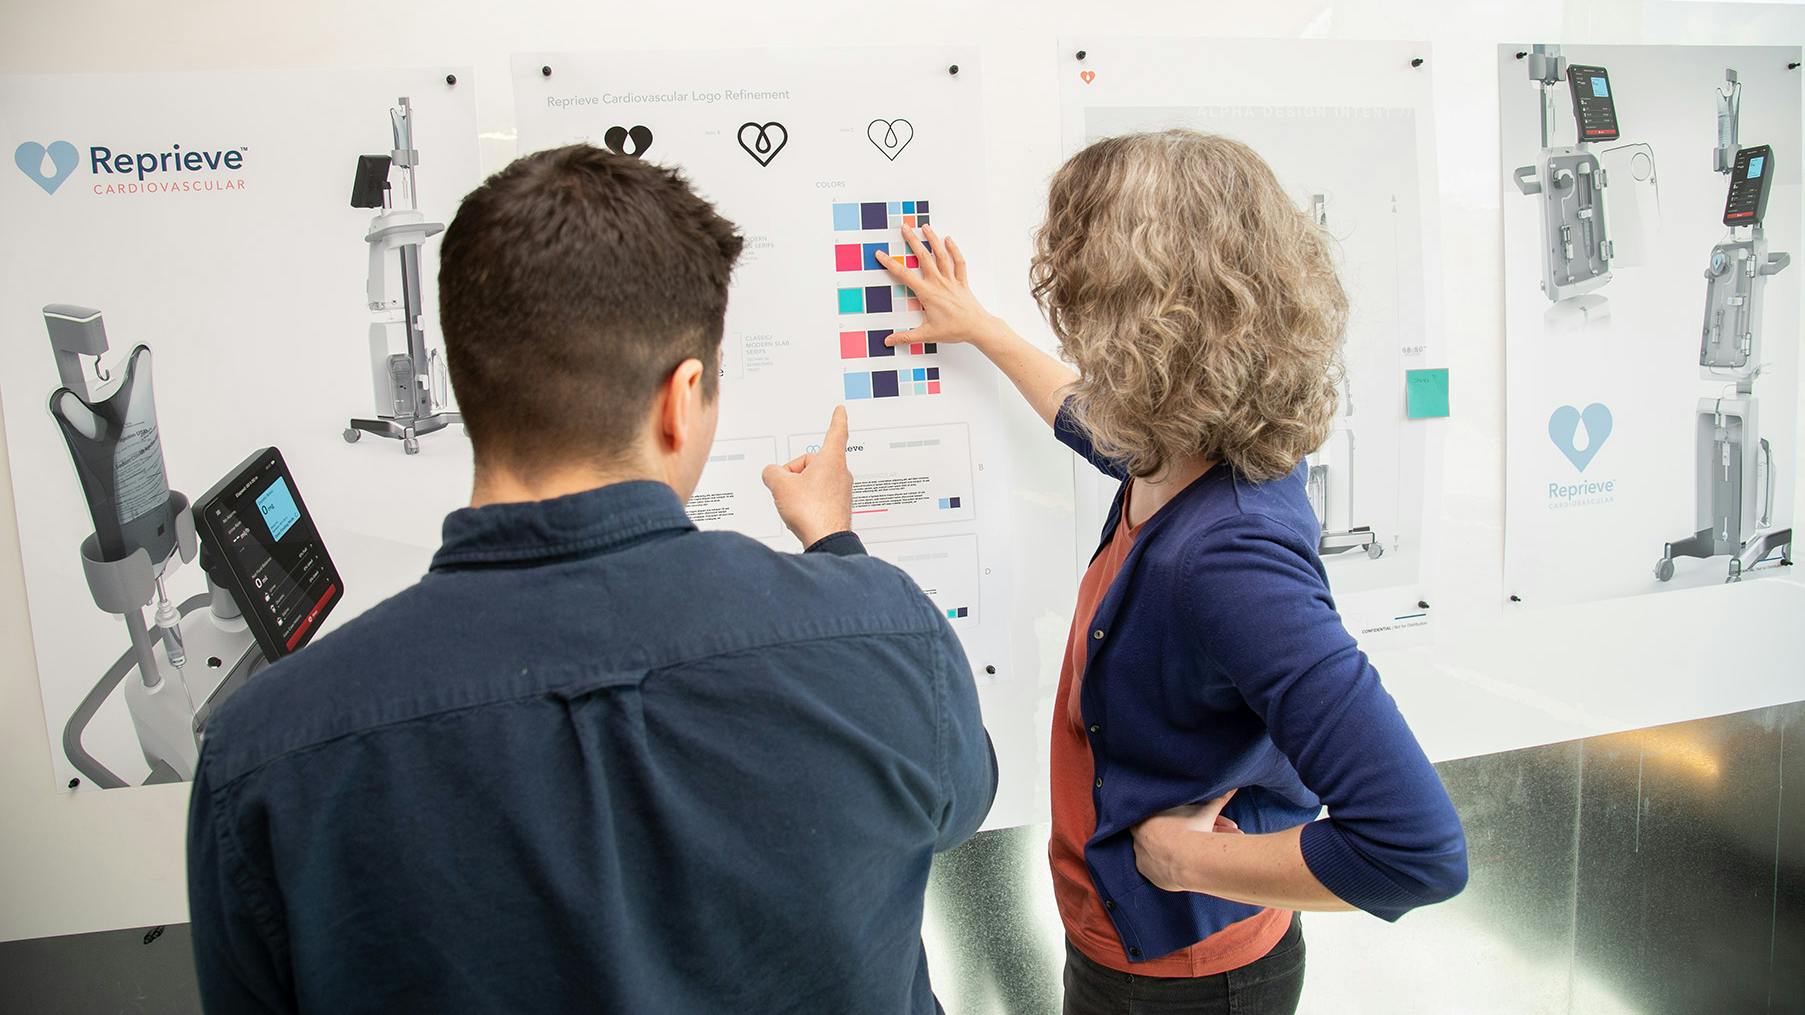 Visual designers looking at branding